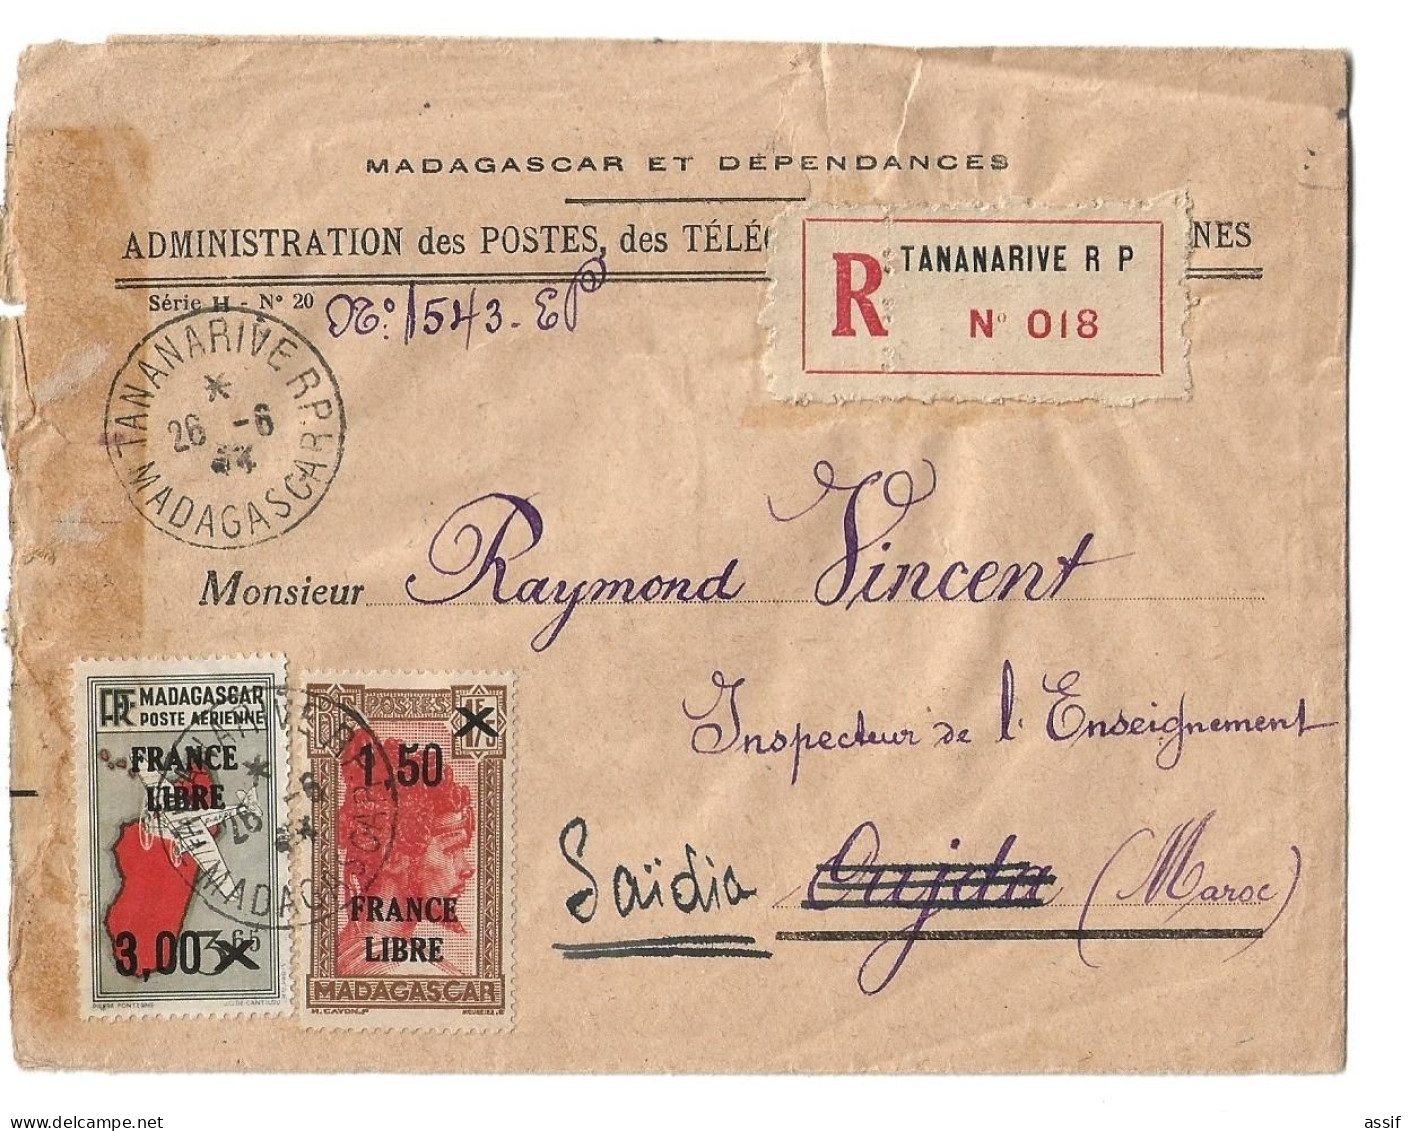 Madagascar Lettre Recommandée Juin 1944 Censure Censor Saidia Maroc - Covers & Documents